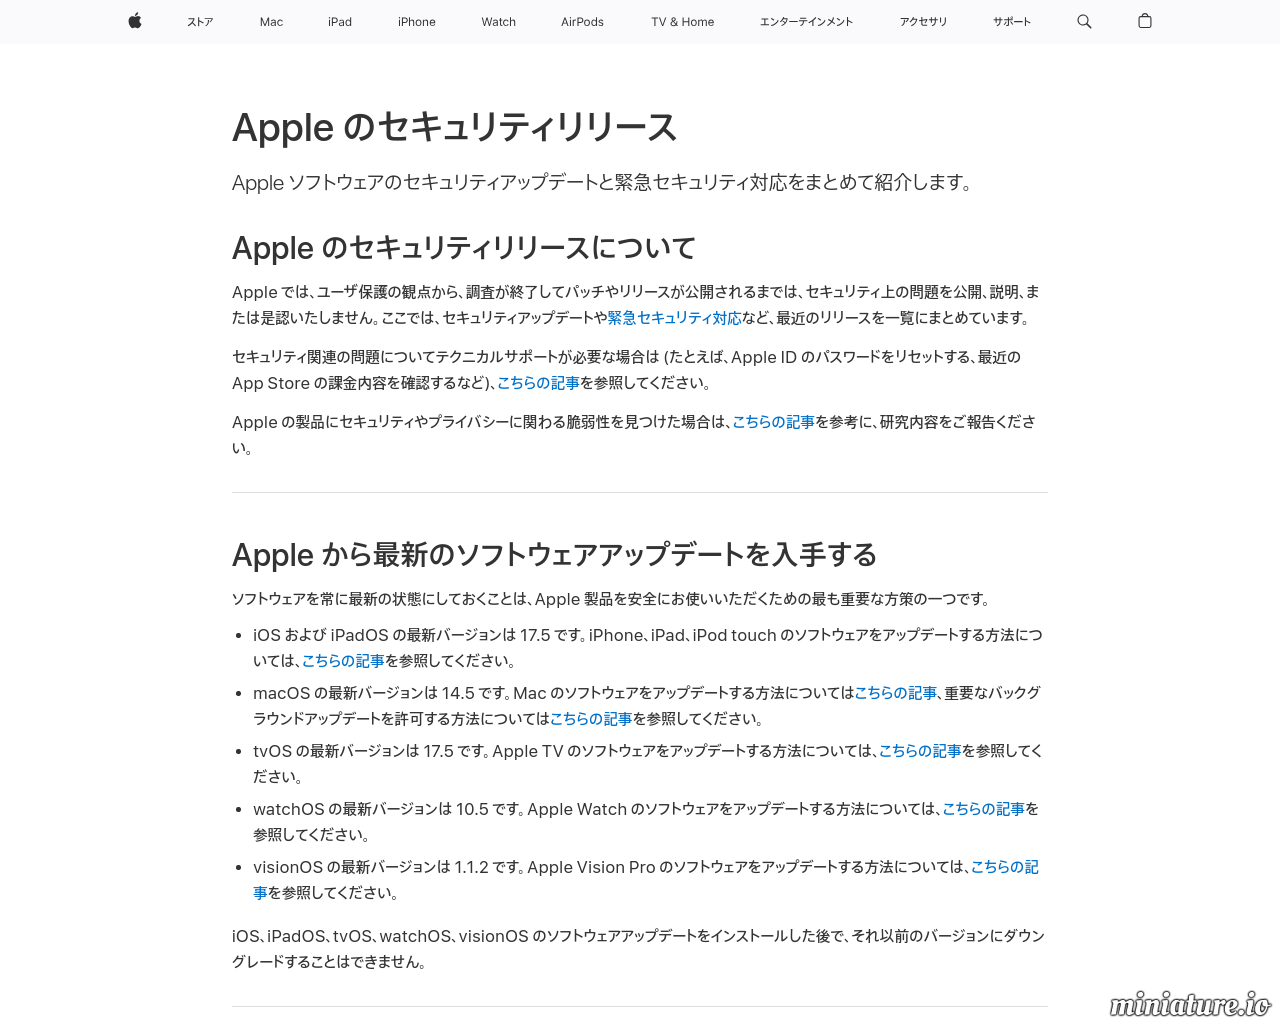 https://web.archive.org/web/20171223113341/https://support.apple.com/ja-jp/HT201222のプレビュー画像